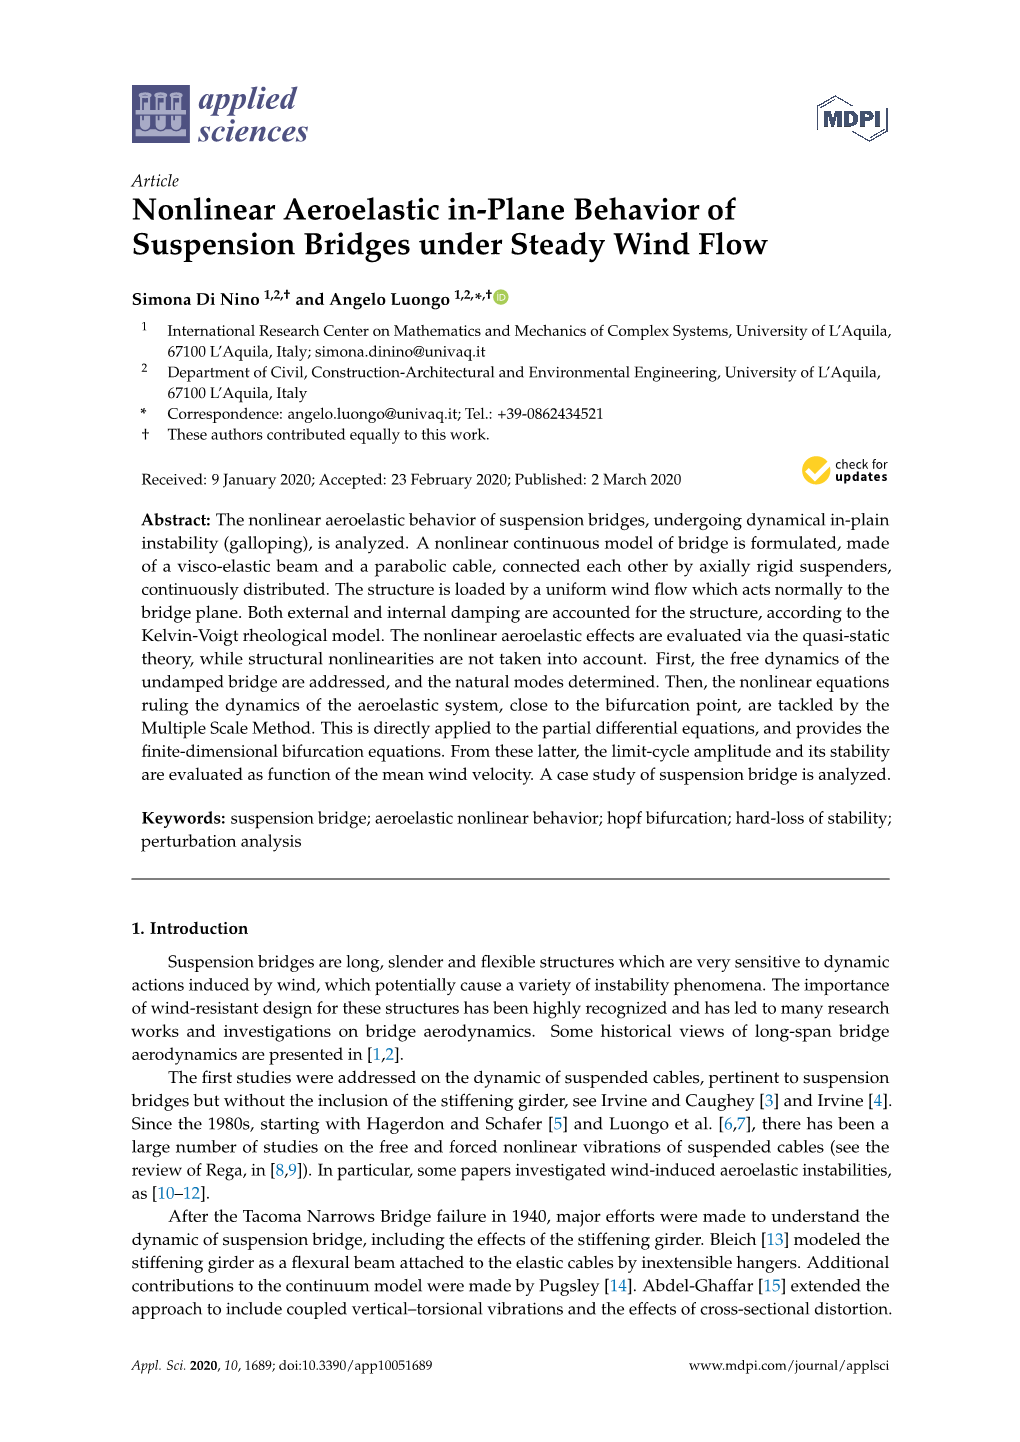 Nonlinear Aeroelastic In-Plane Behavior of Suspension Bridges Under Steady Wind Flow